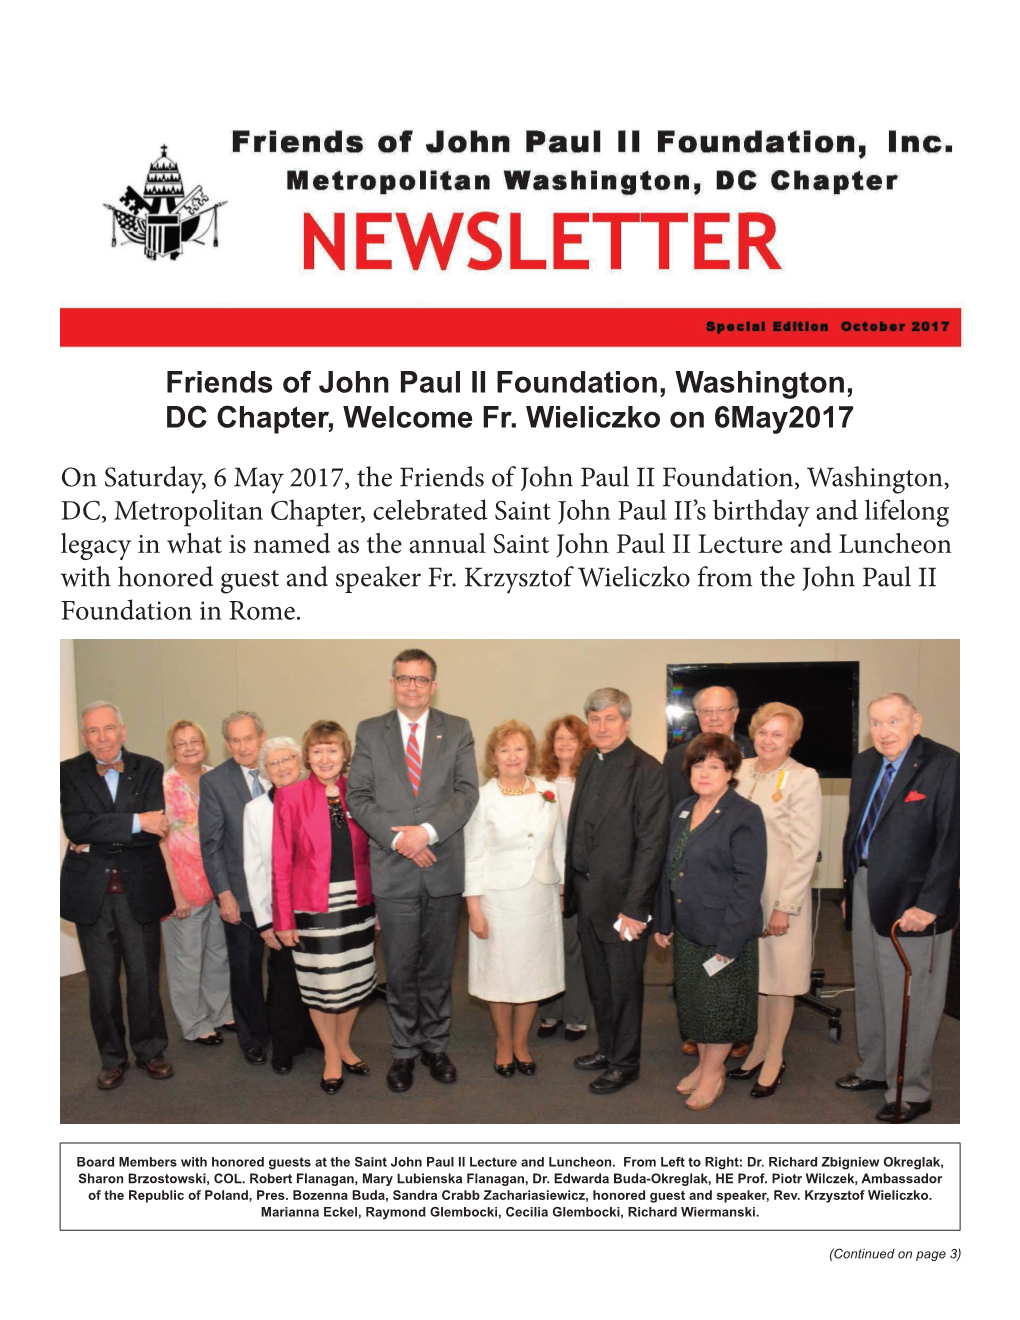 Friends of John Paul II Foundation, Washington, DC Chapter, Welcome Fr. Wieliczko on 6May2017